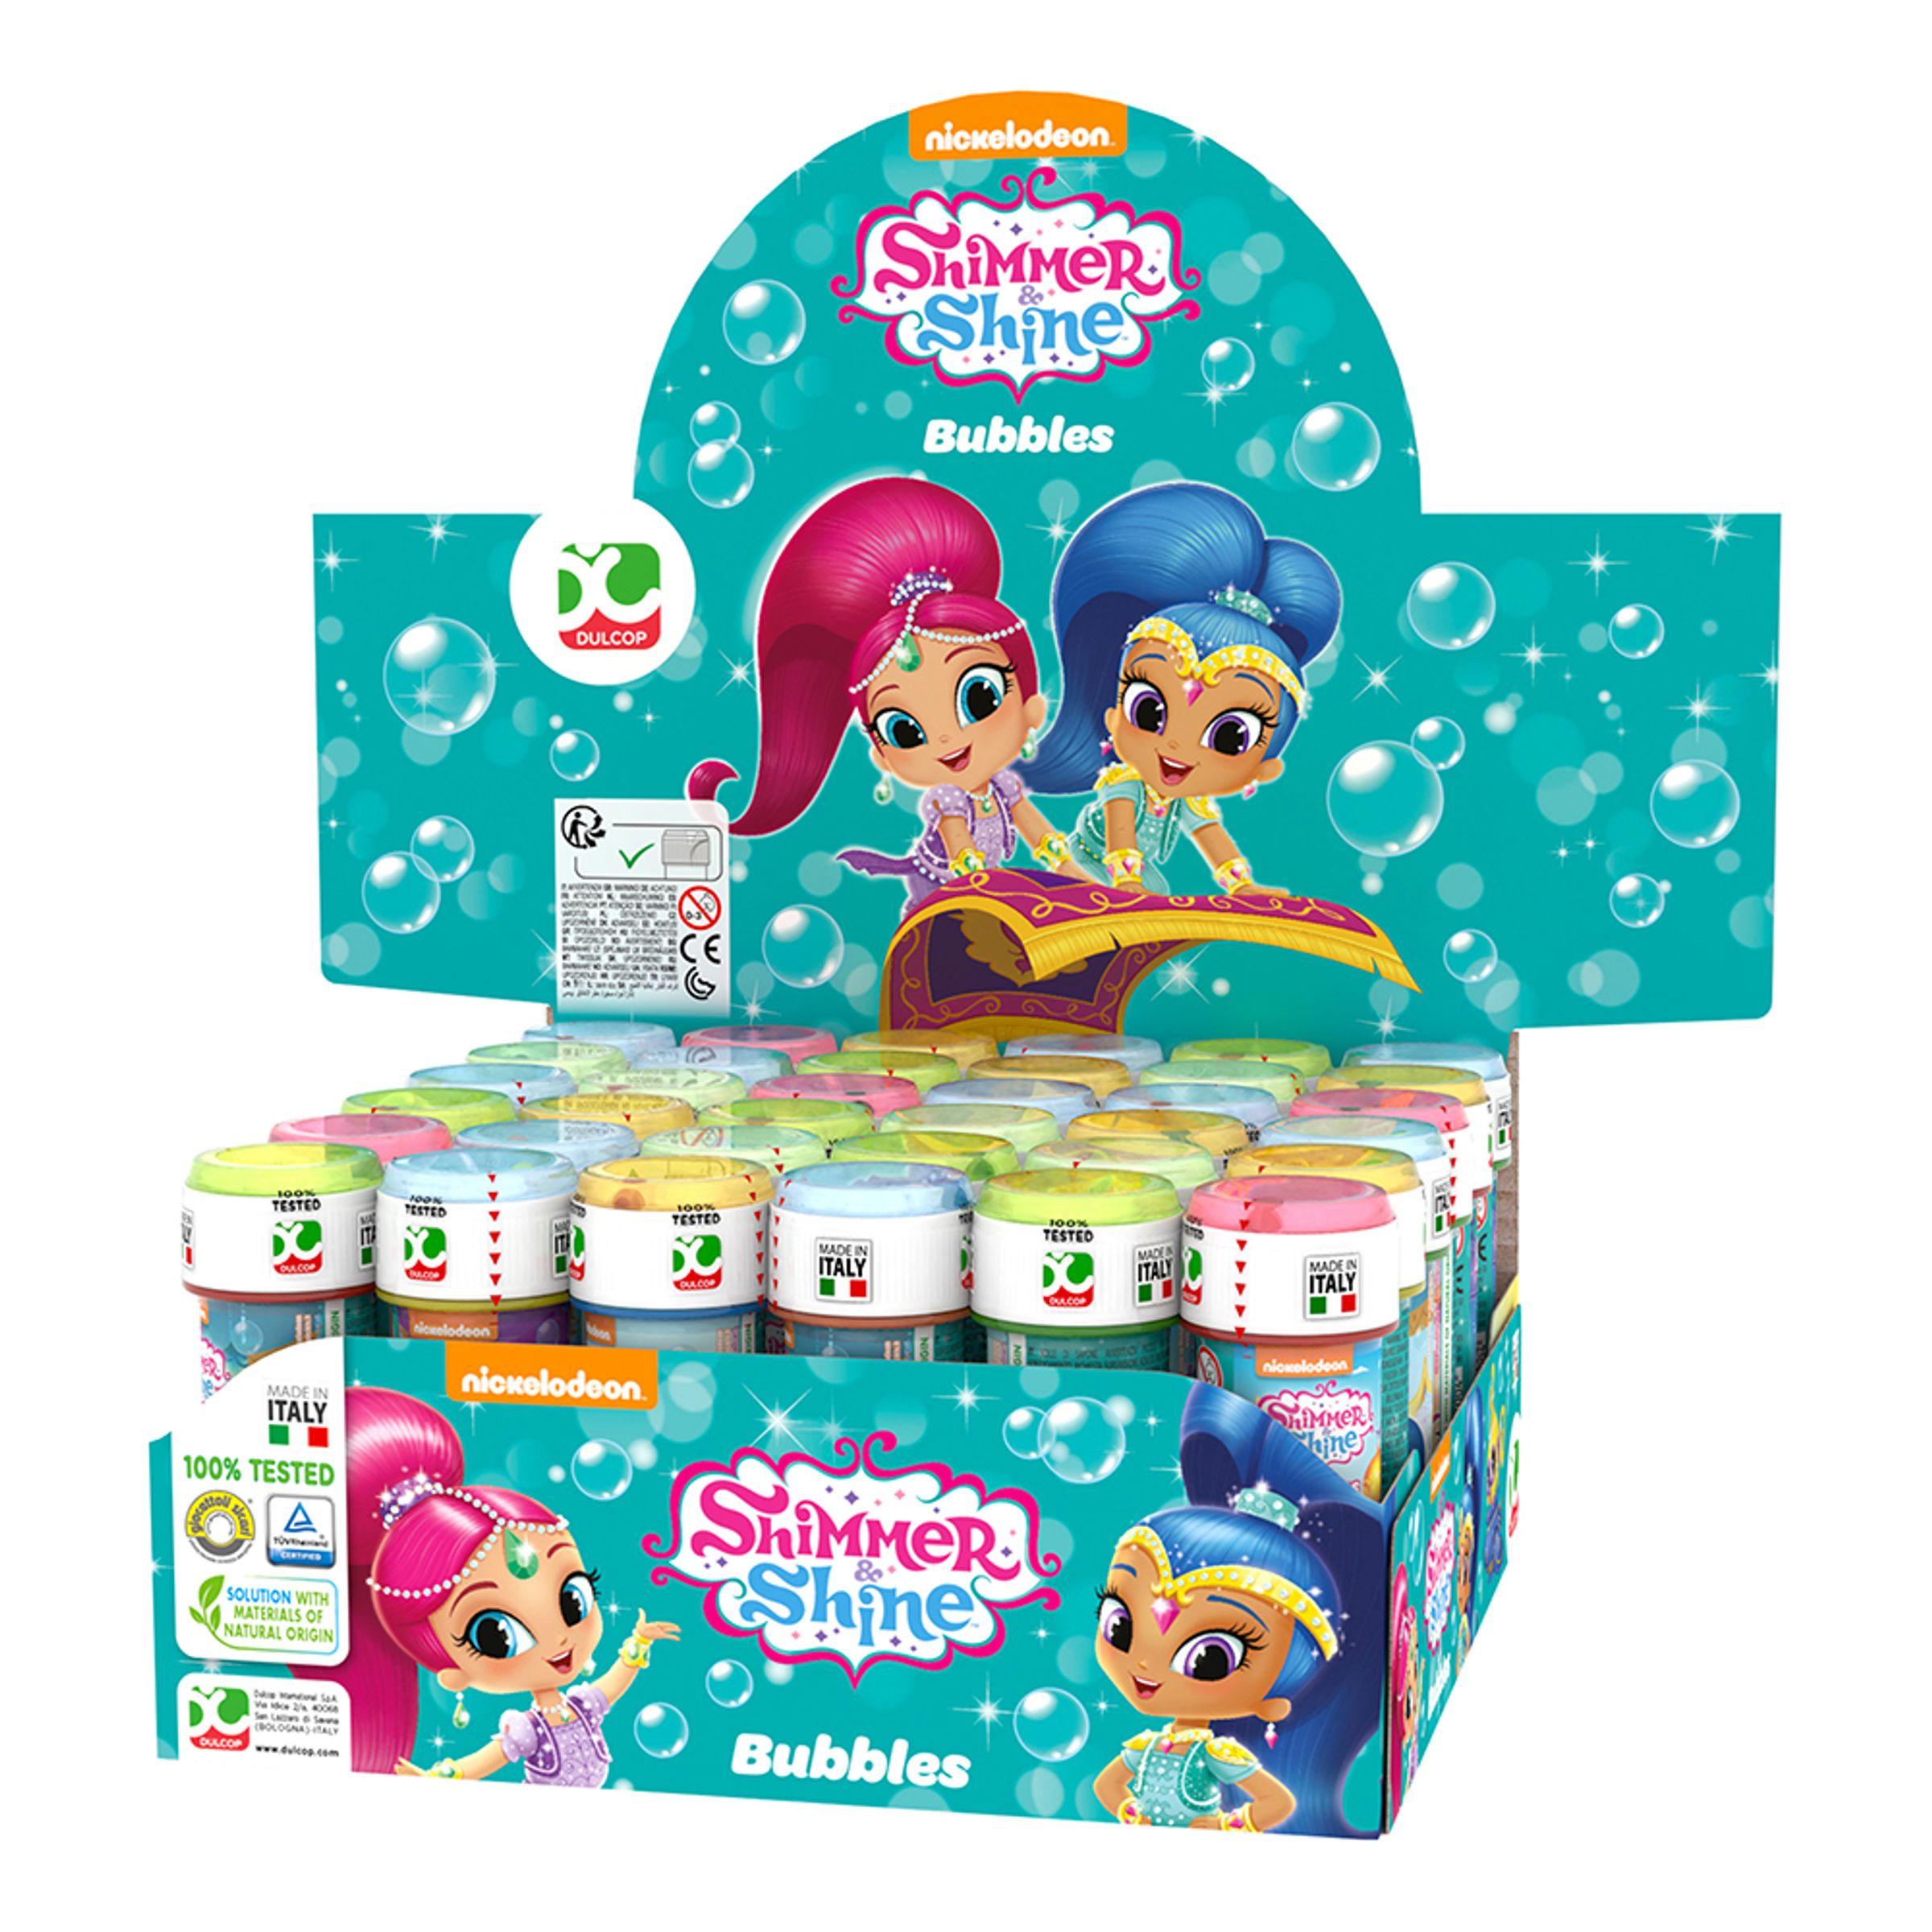 Såpbubblor Shimmer & Shine - 36-pack